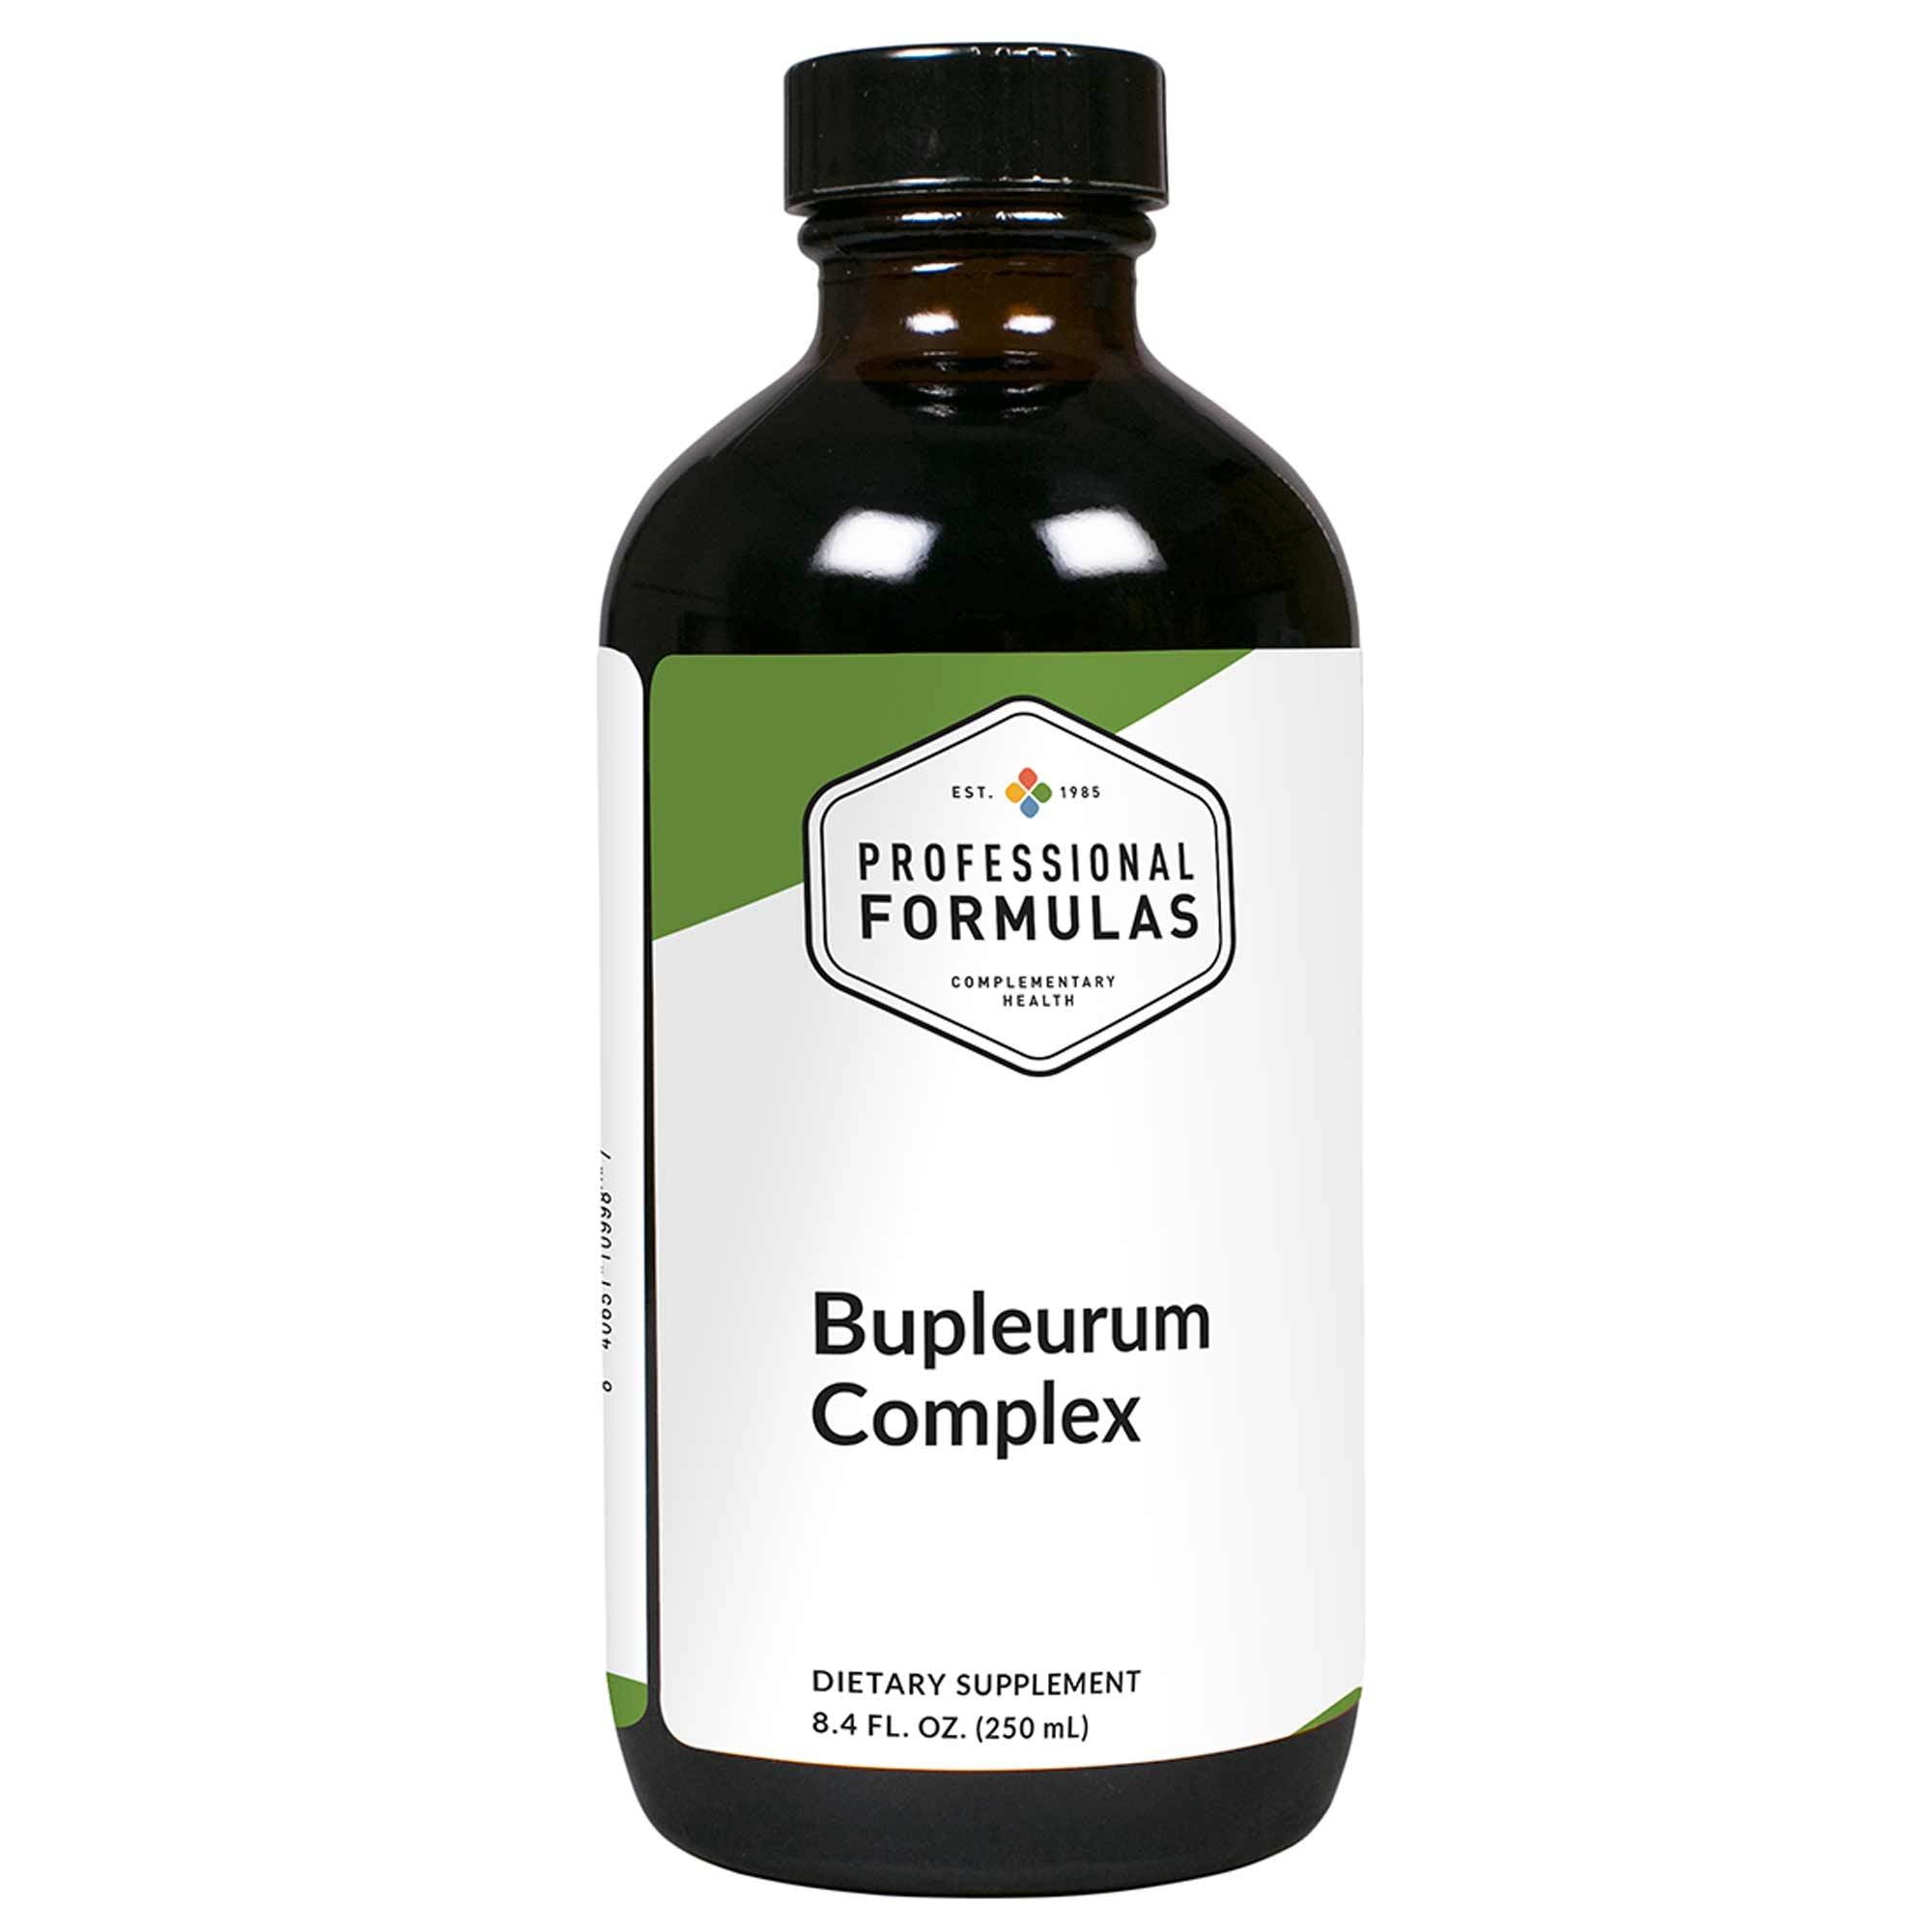 Professional Formulas - Bupleurum Complex - 8.4 FL. OZ. (250 mL)